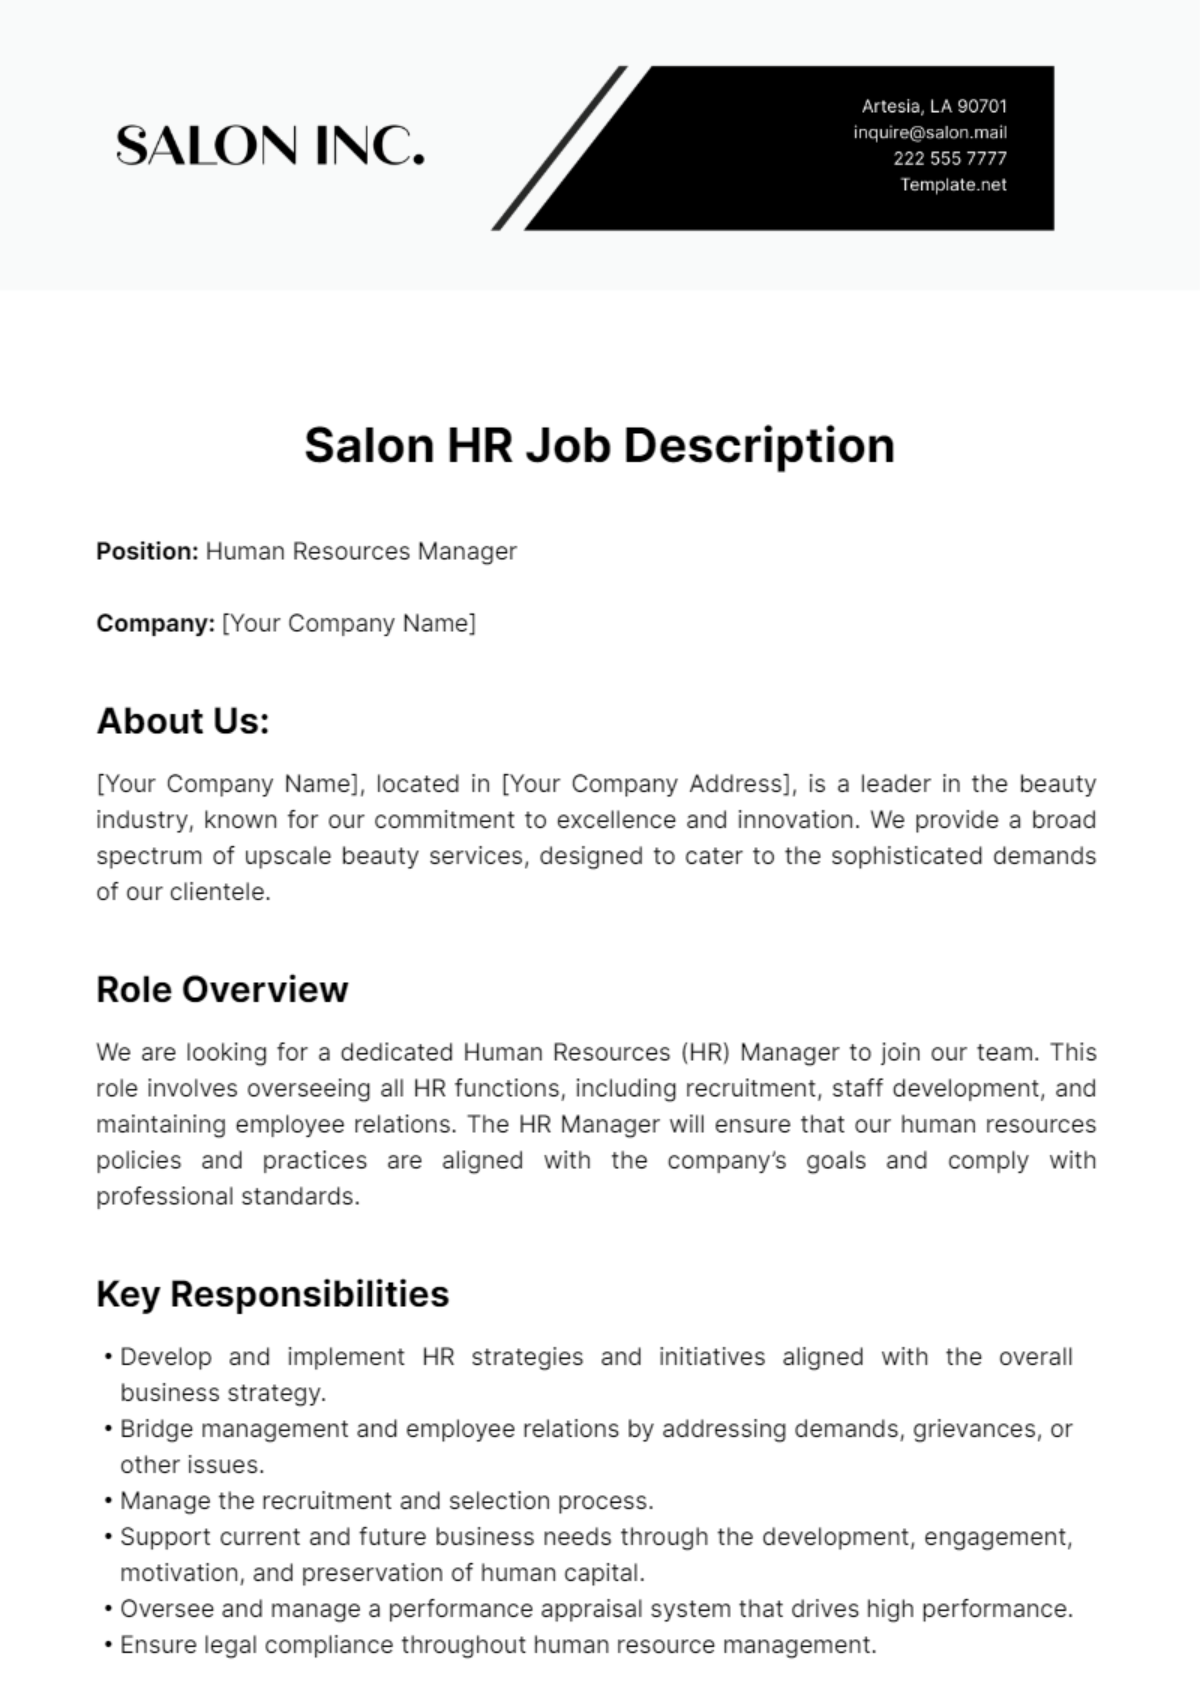 Free Salon HR Job Description Template